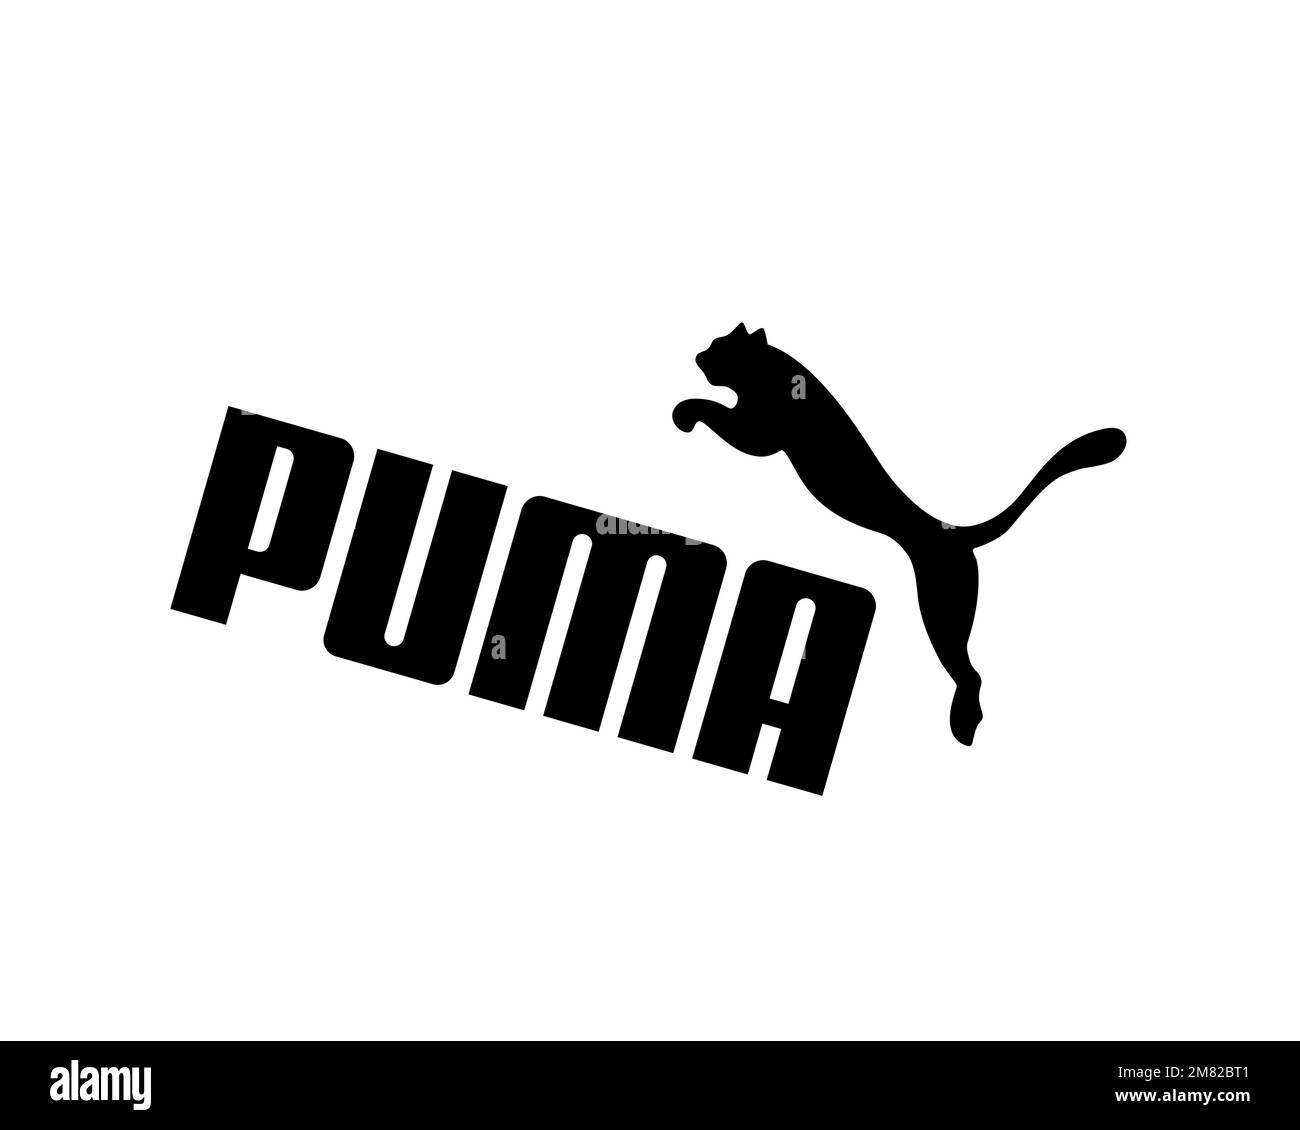 Cougar brand, rotated logo, white background B Stock Photo - Alamy